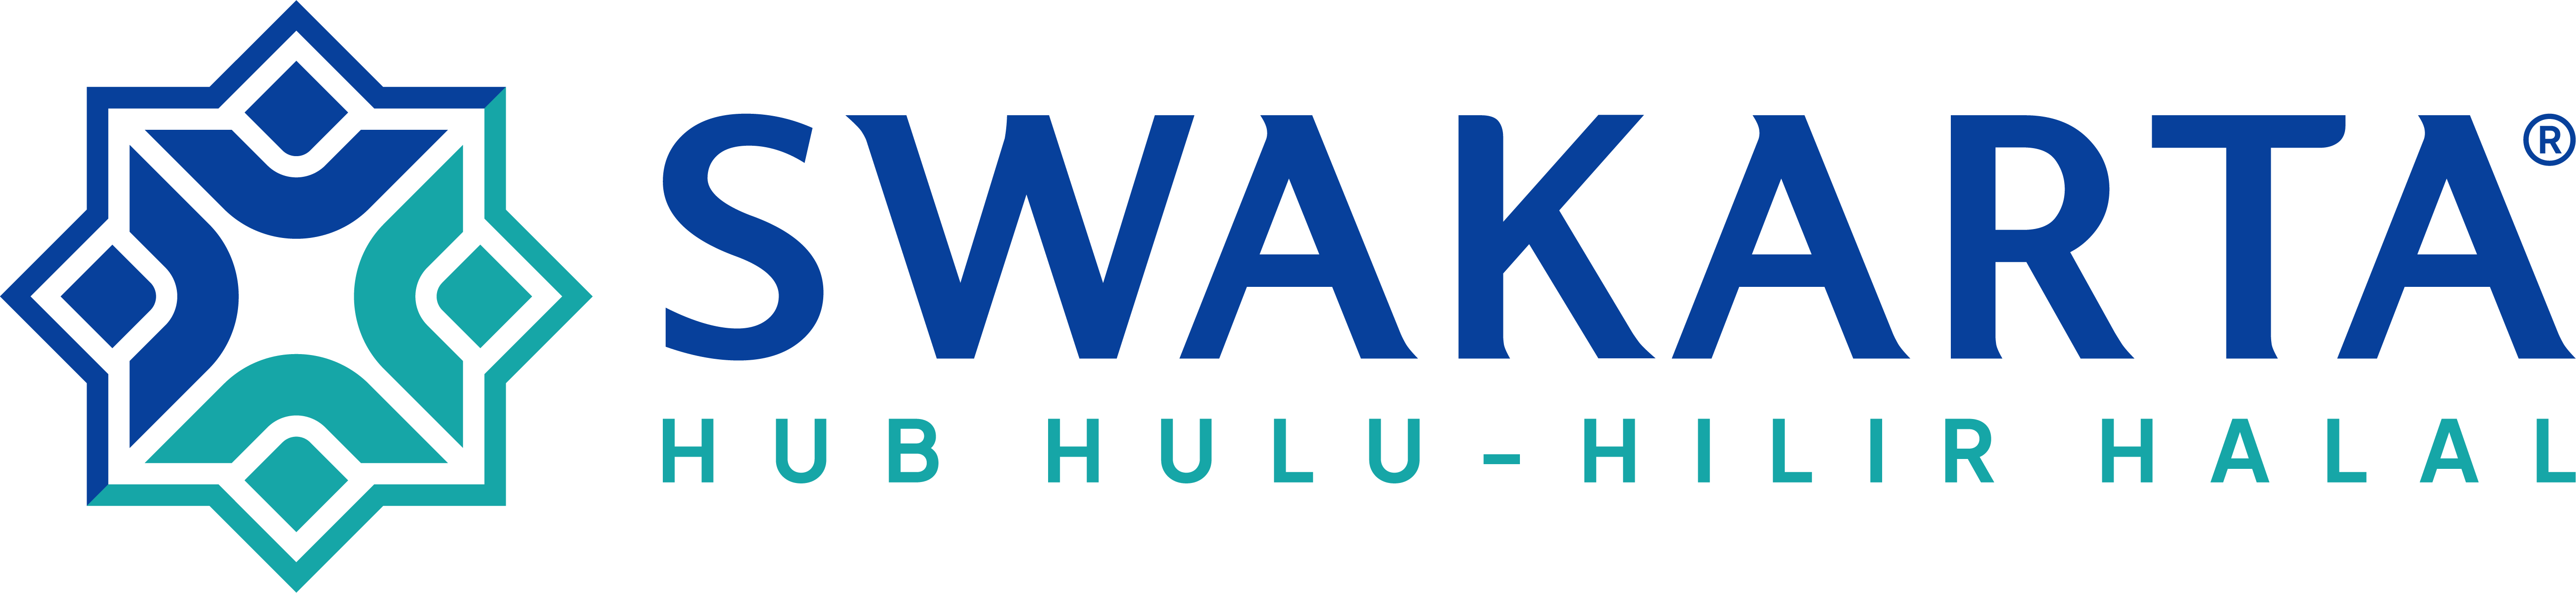 swakarta-logo